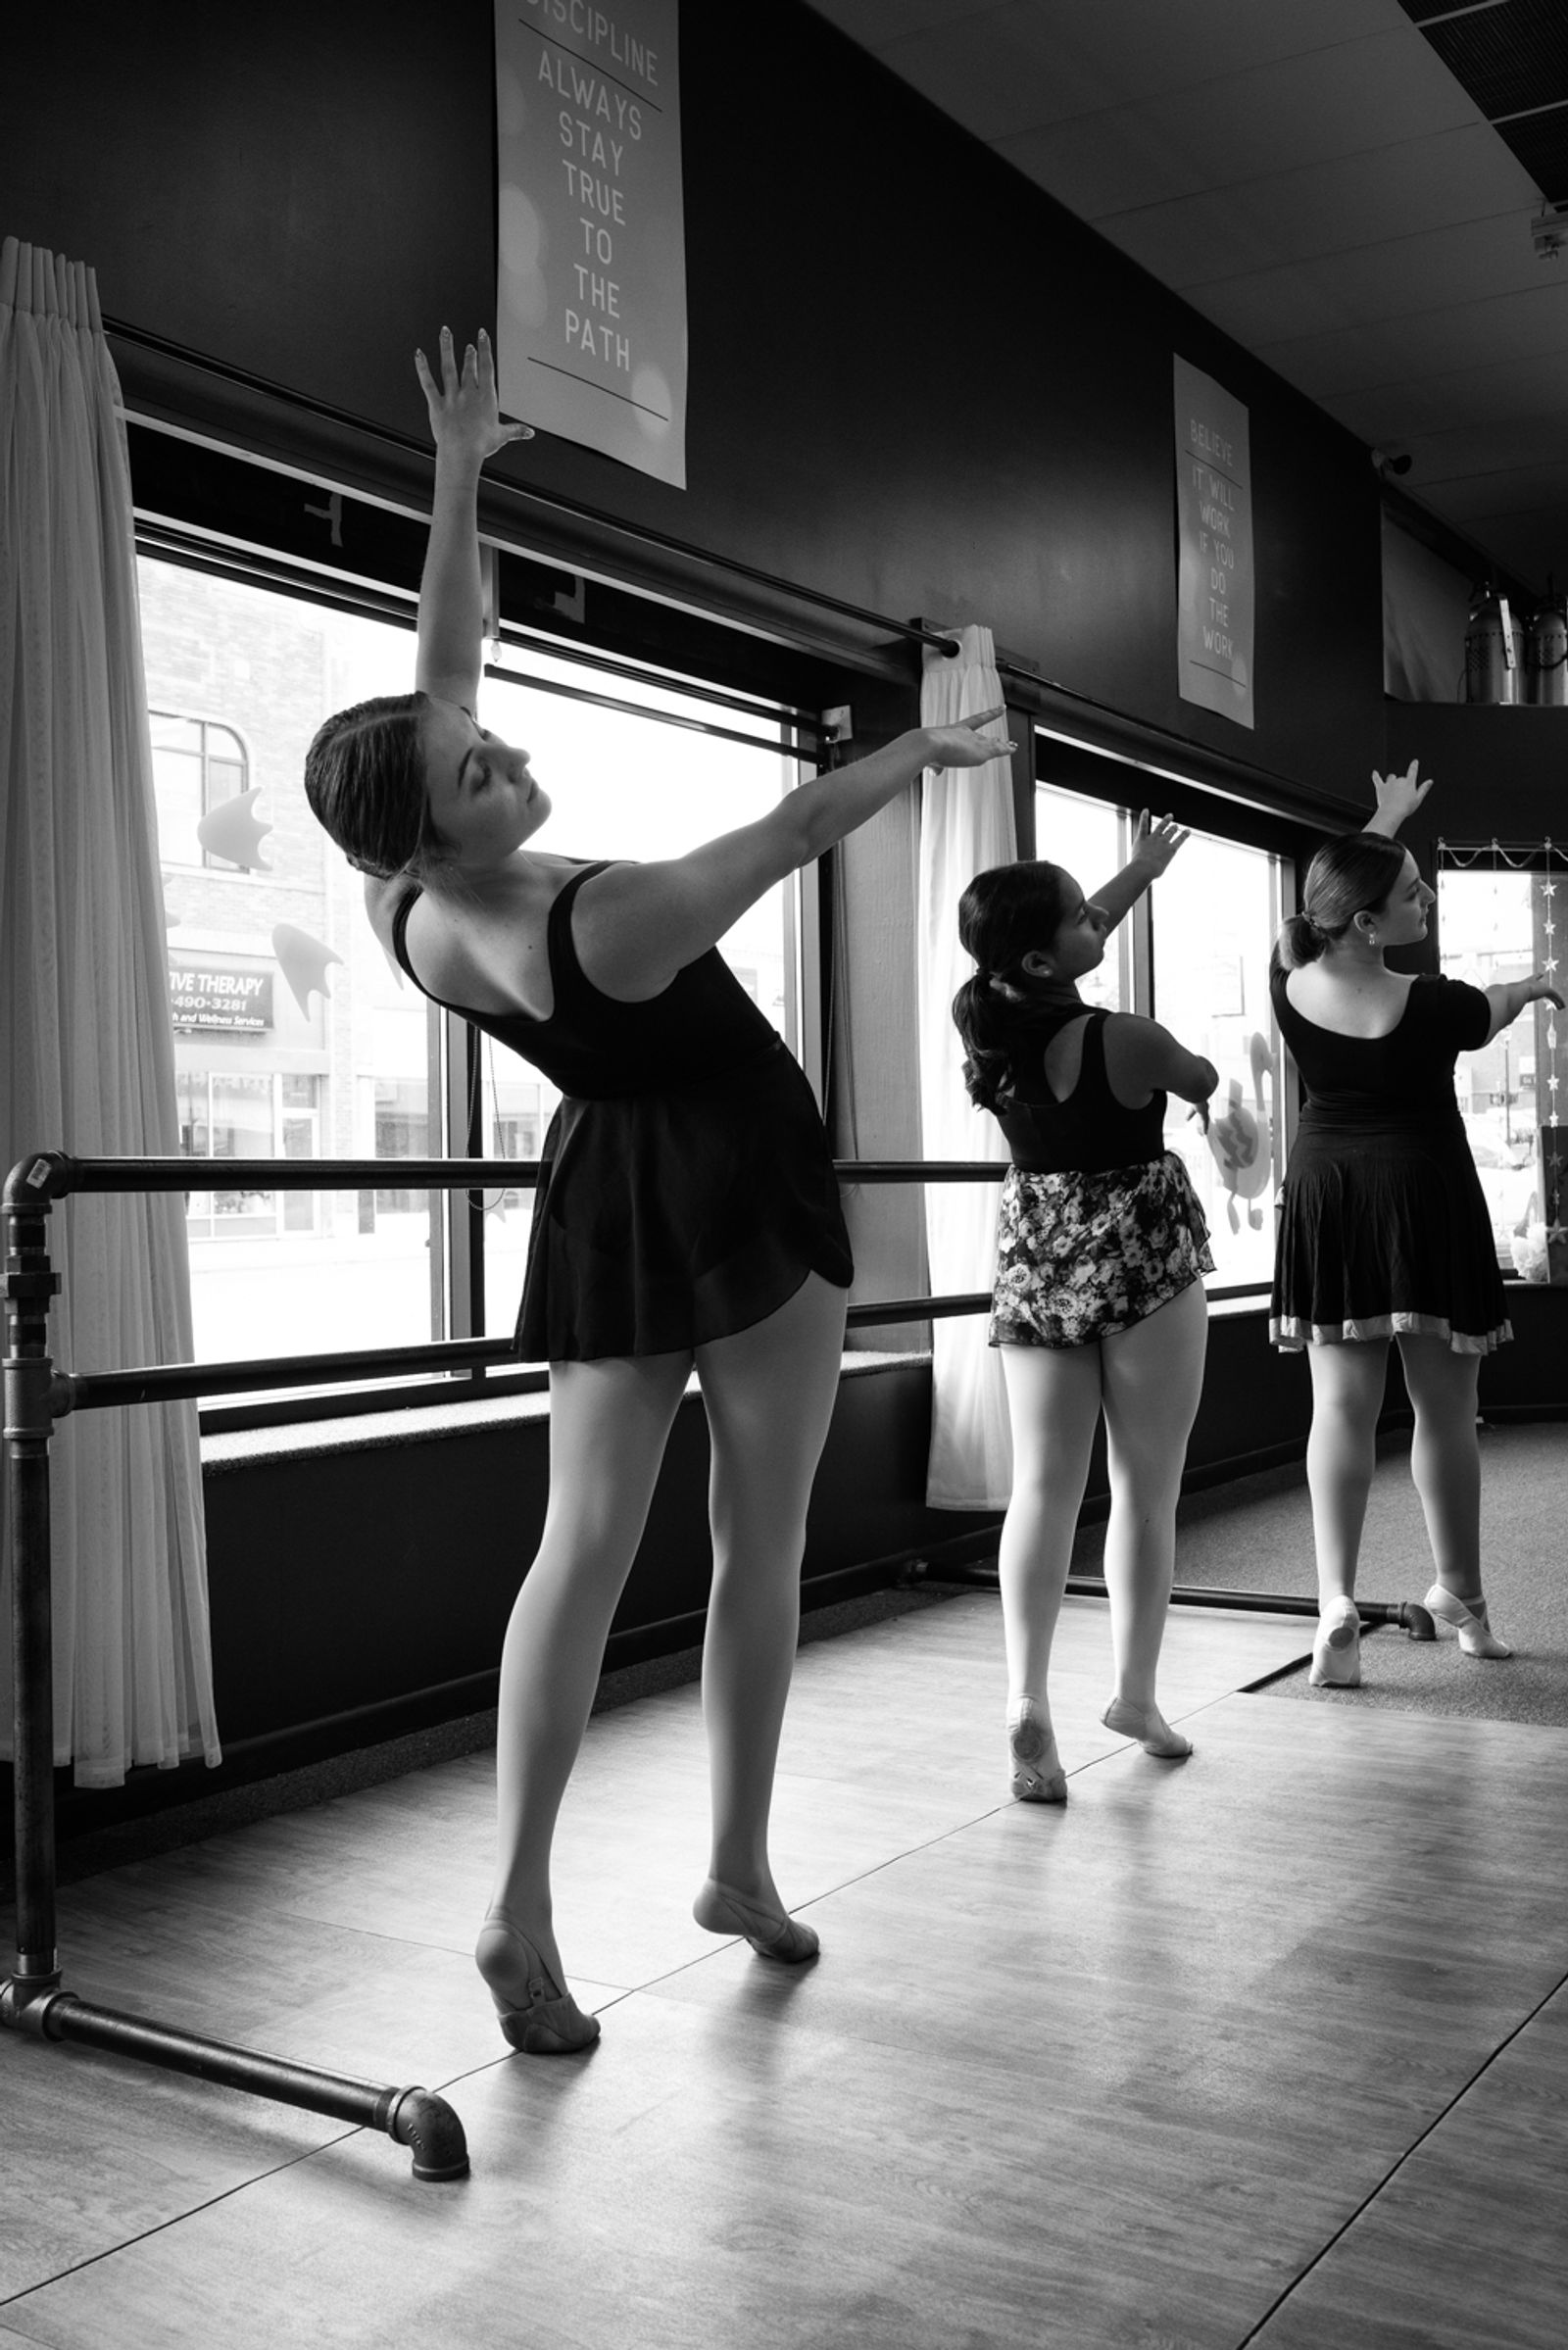 © Richard Sharum - Ballerina School. Valley City, North Dakota. 10.20.2021